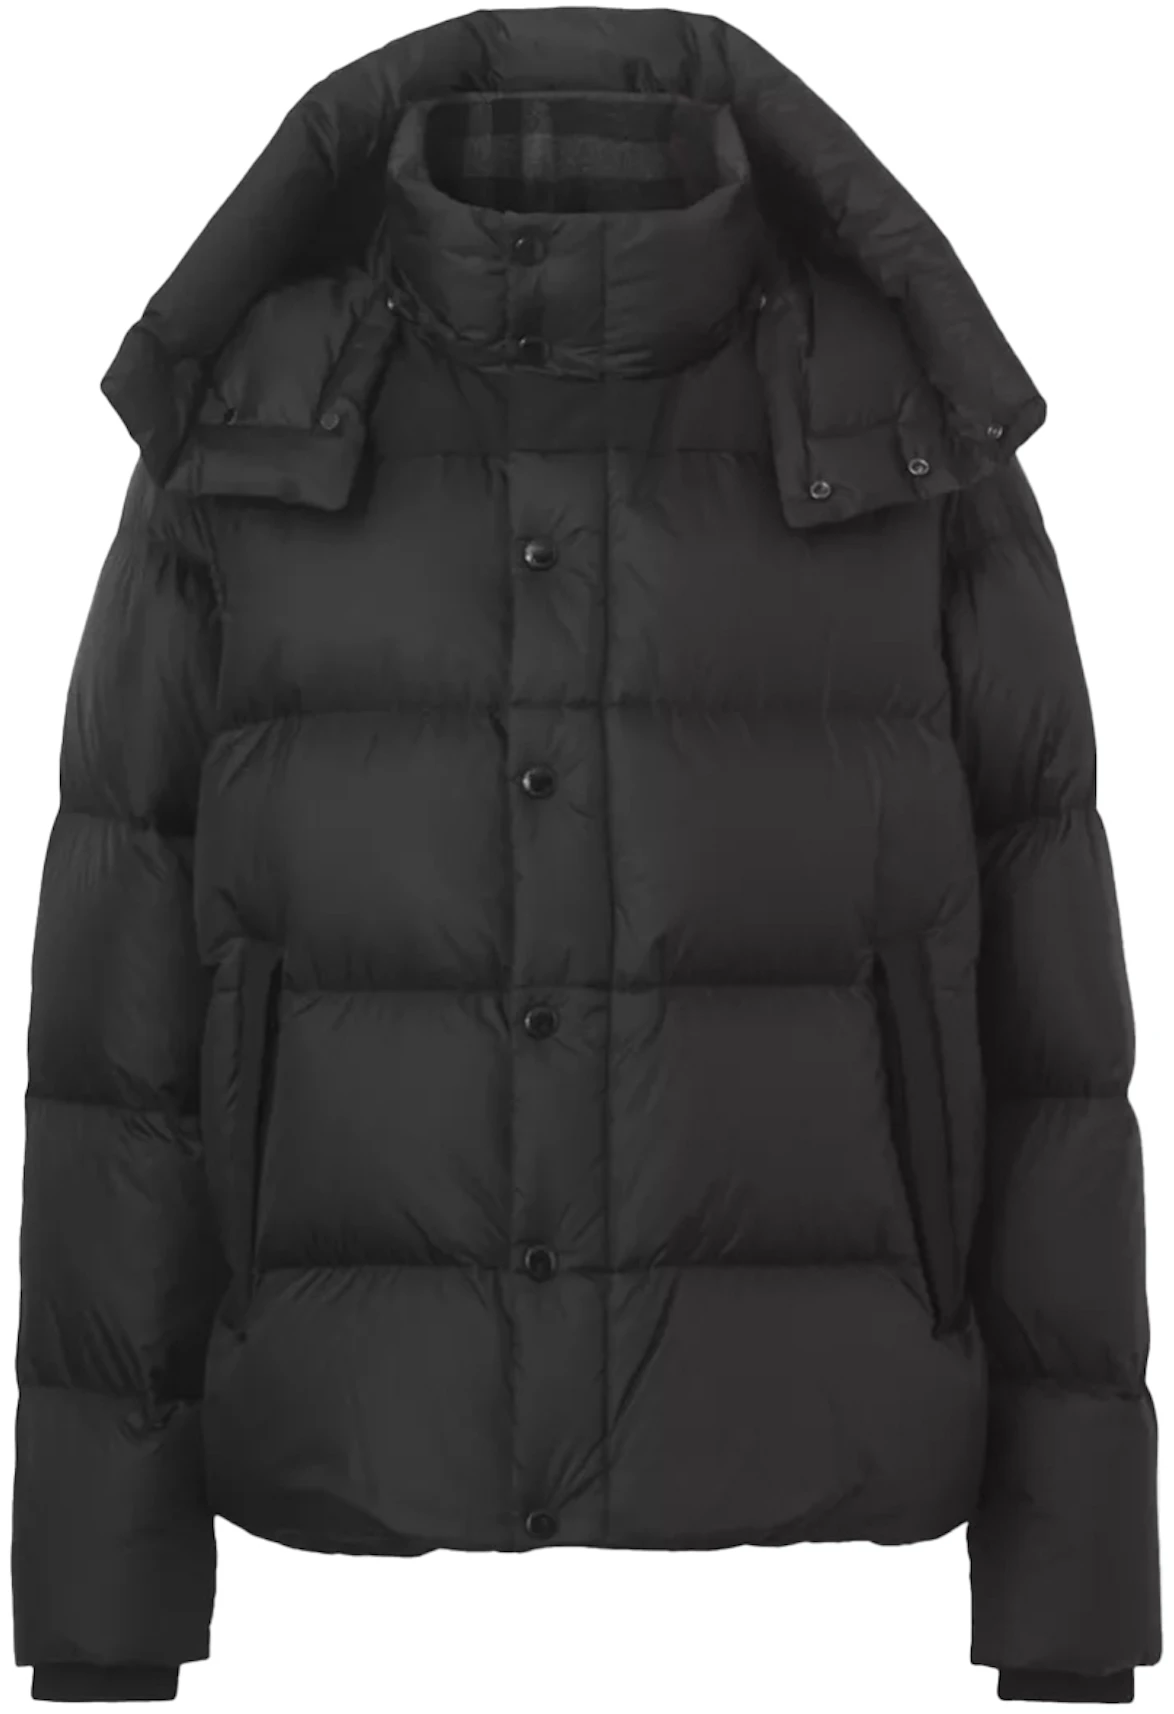 Burberry Detachable Sleeve Hooded Puffer Jacket Black - GB